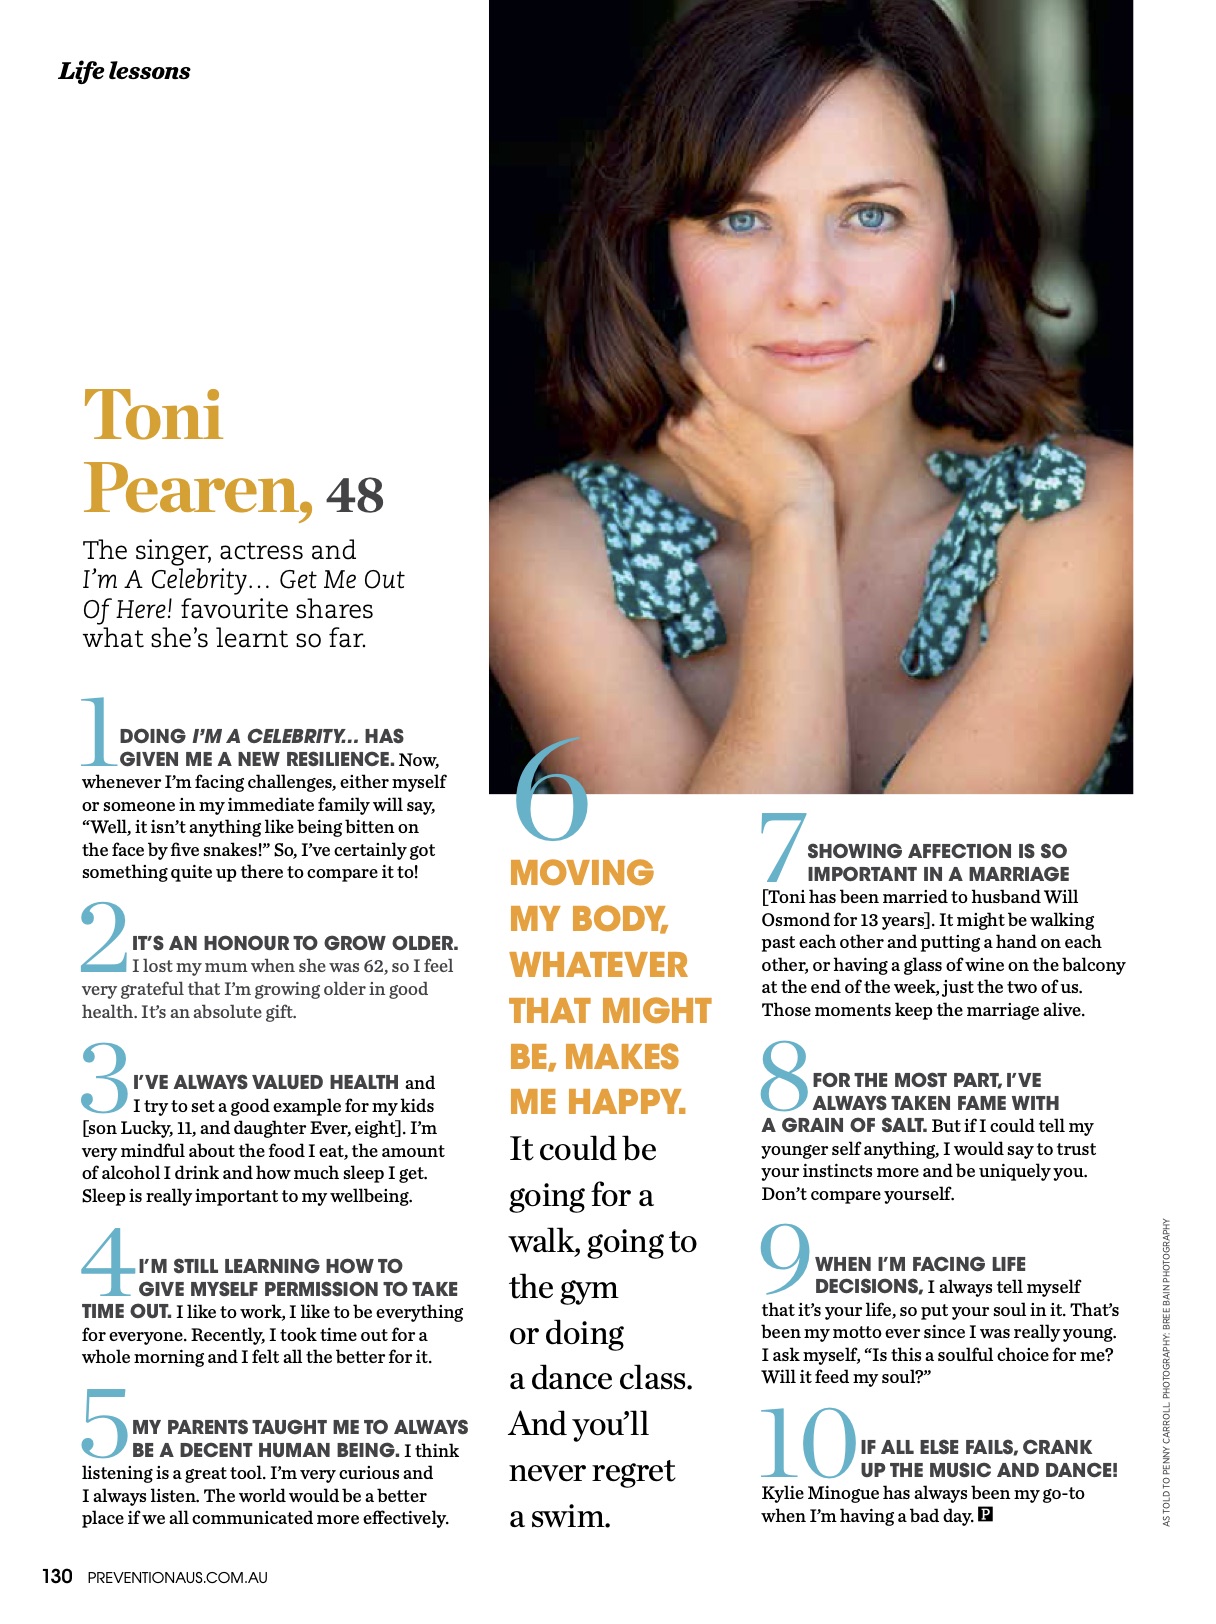 Toni Pearen's life lessons in Prevention magazine